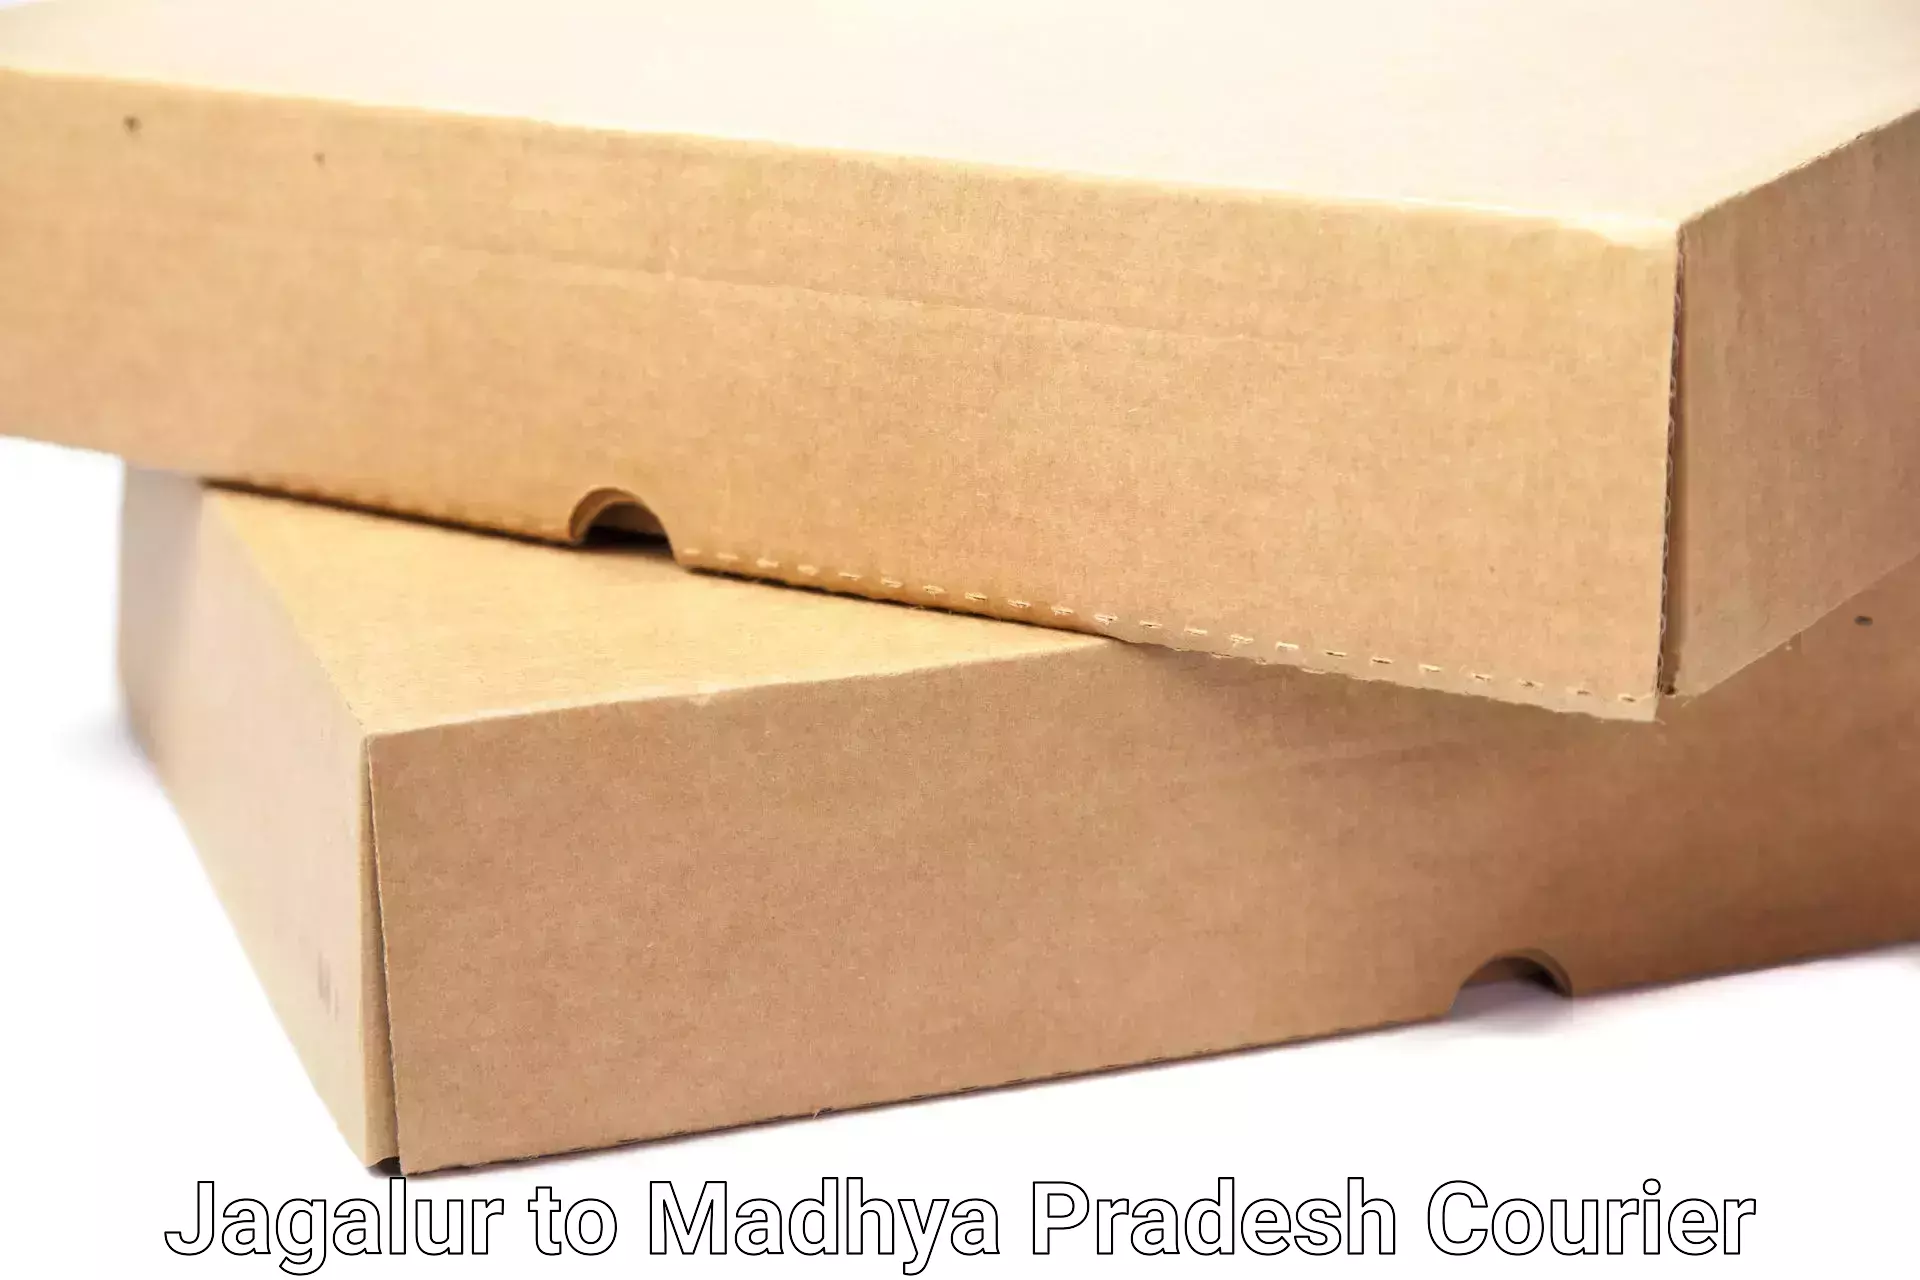 Home moving experts Jagalur to Madhya Pradesh